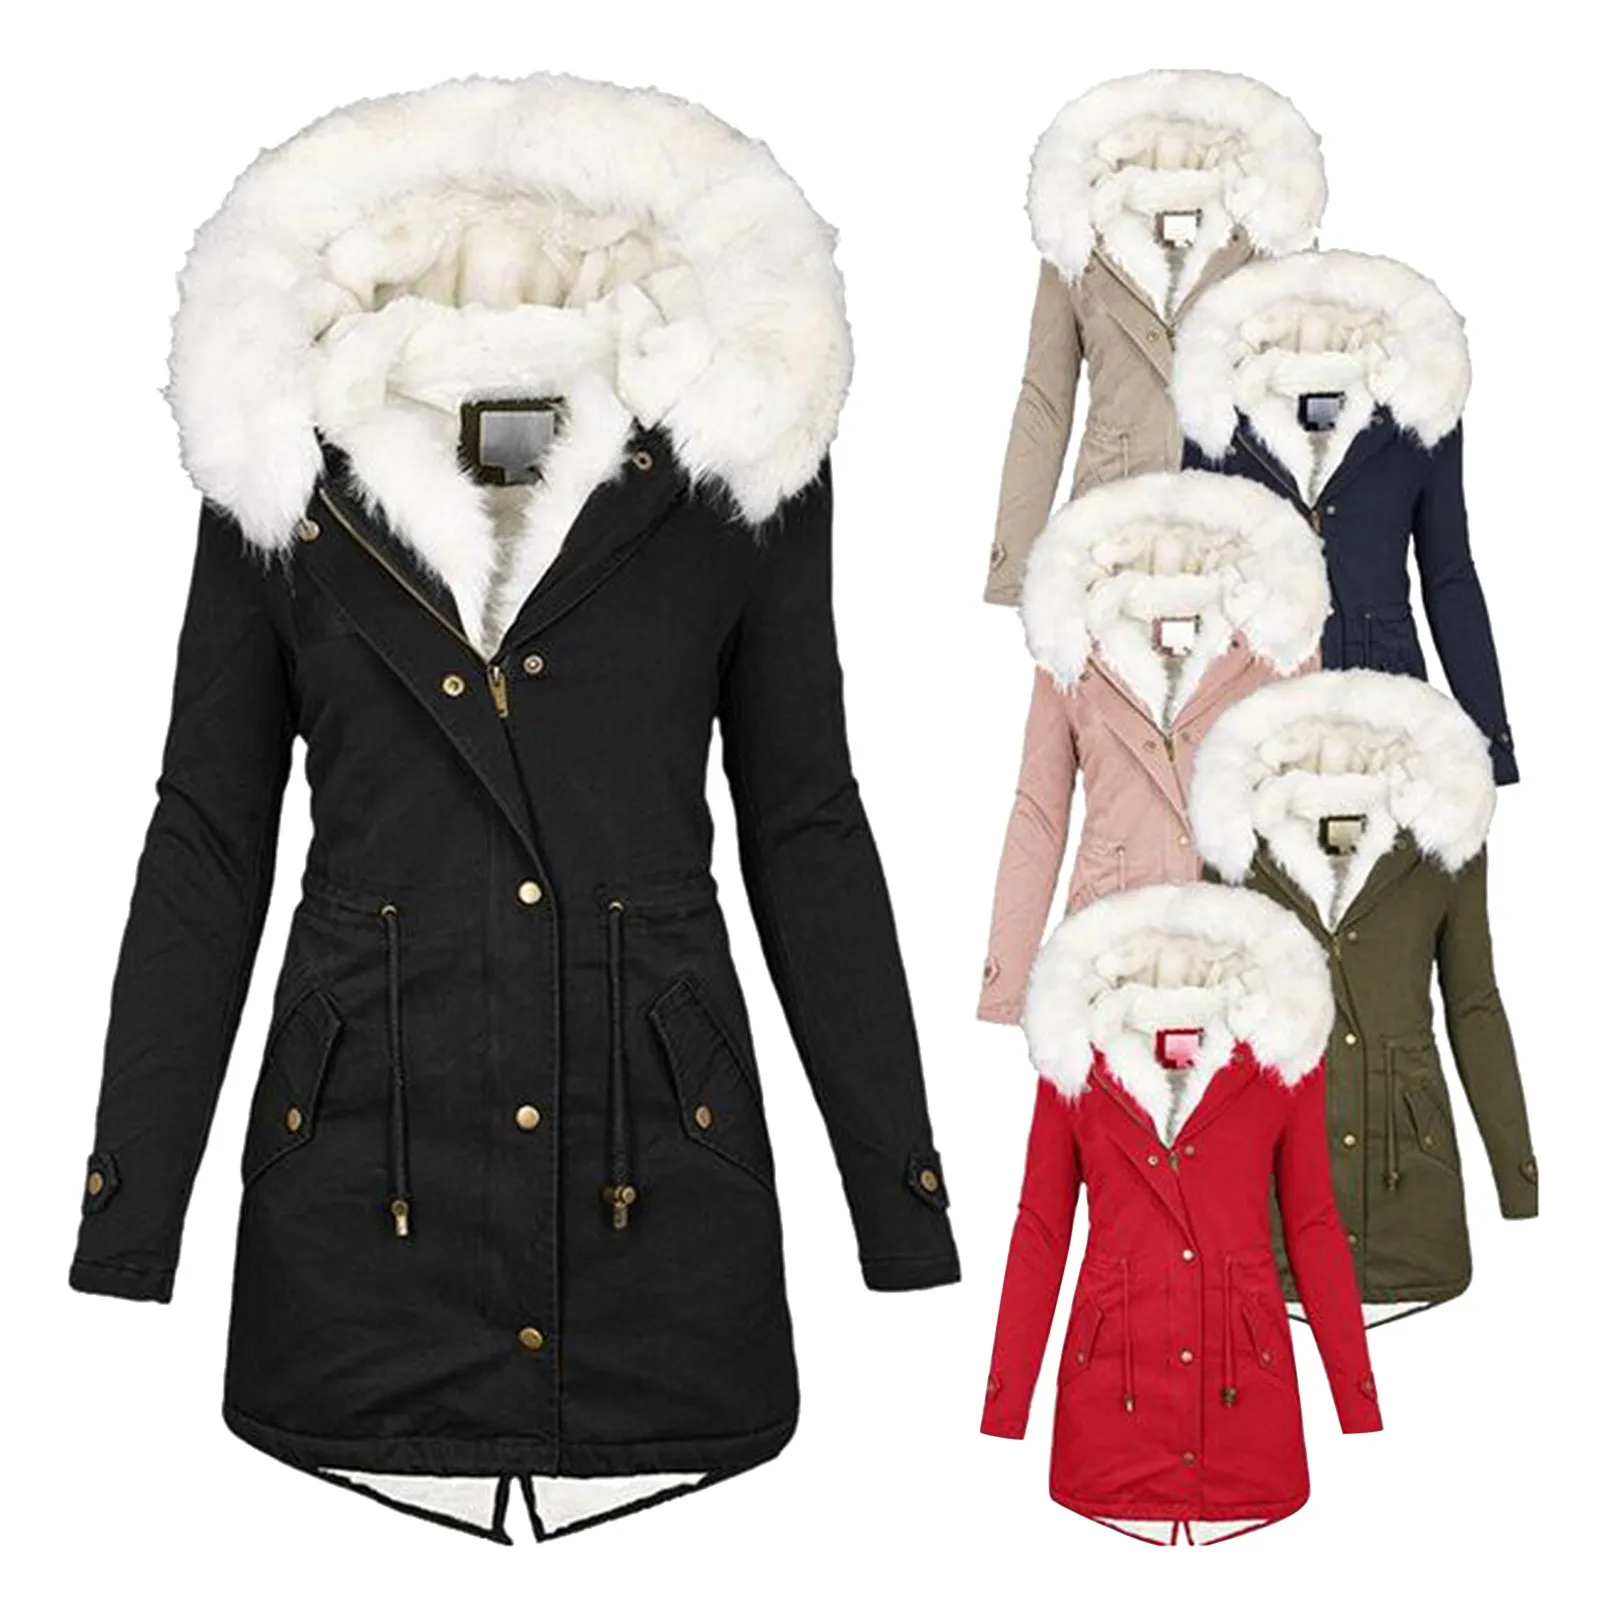 New winter women jacket medium-long thicken plus size 5XL outwear hooded wadded coat slim parka cotton-padded jacket overcoat